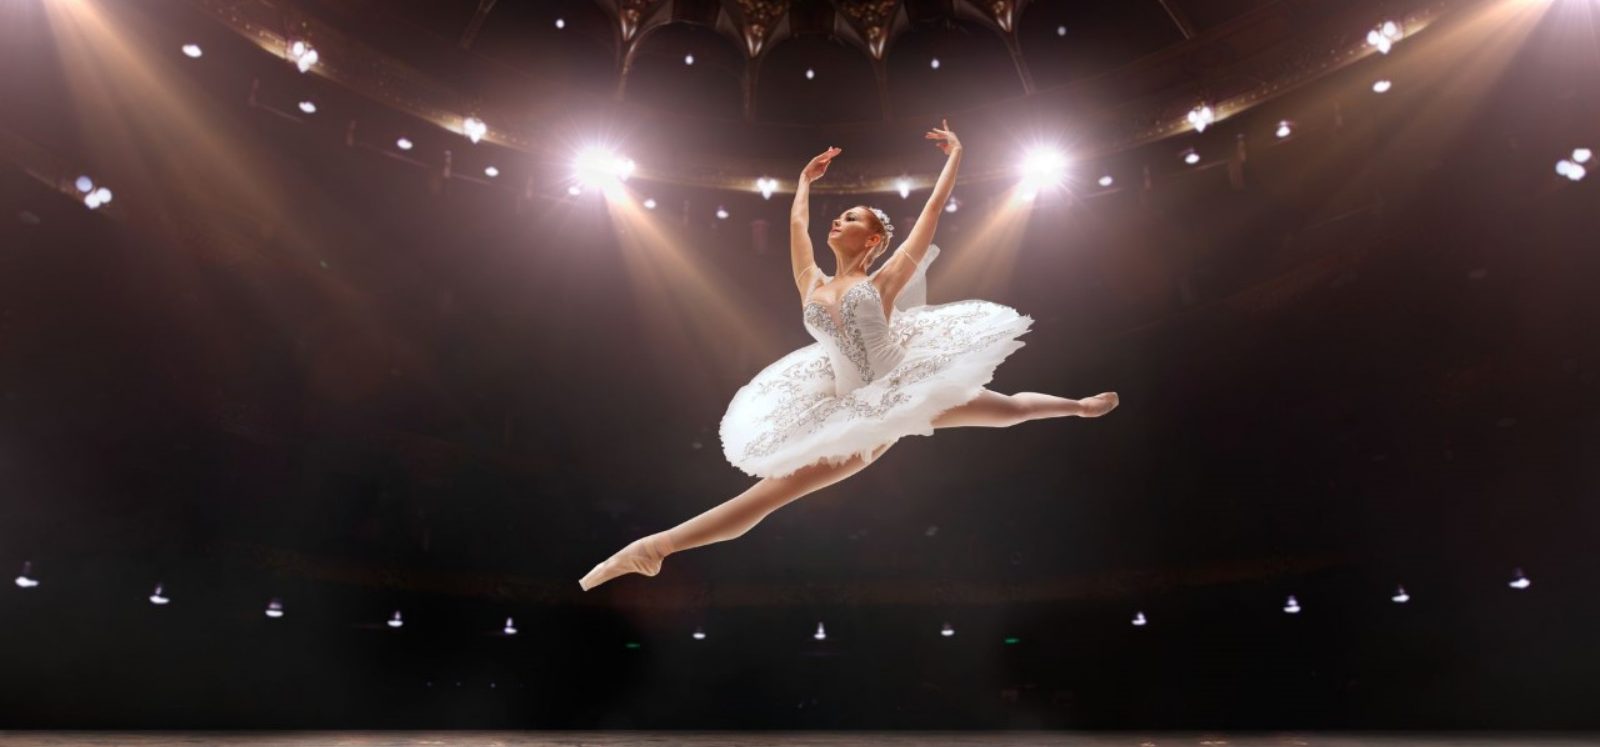 image of a ballerina dancing onstage